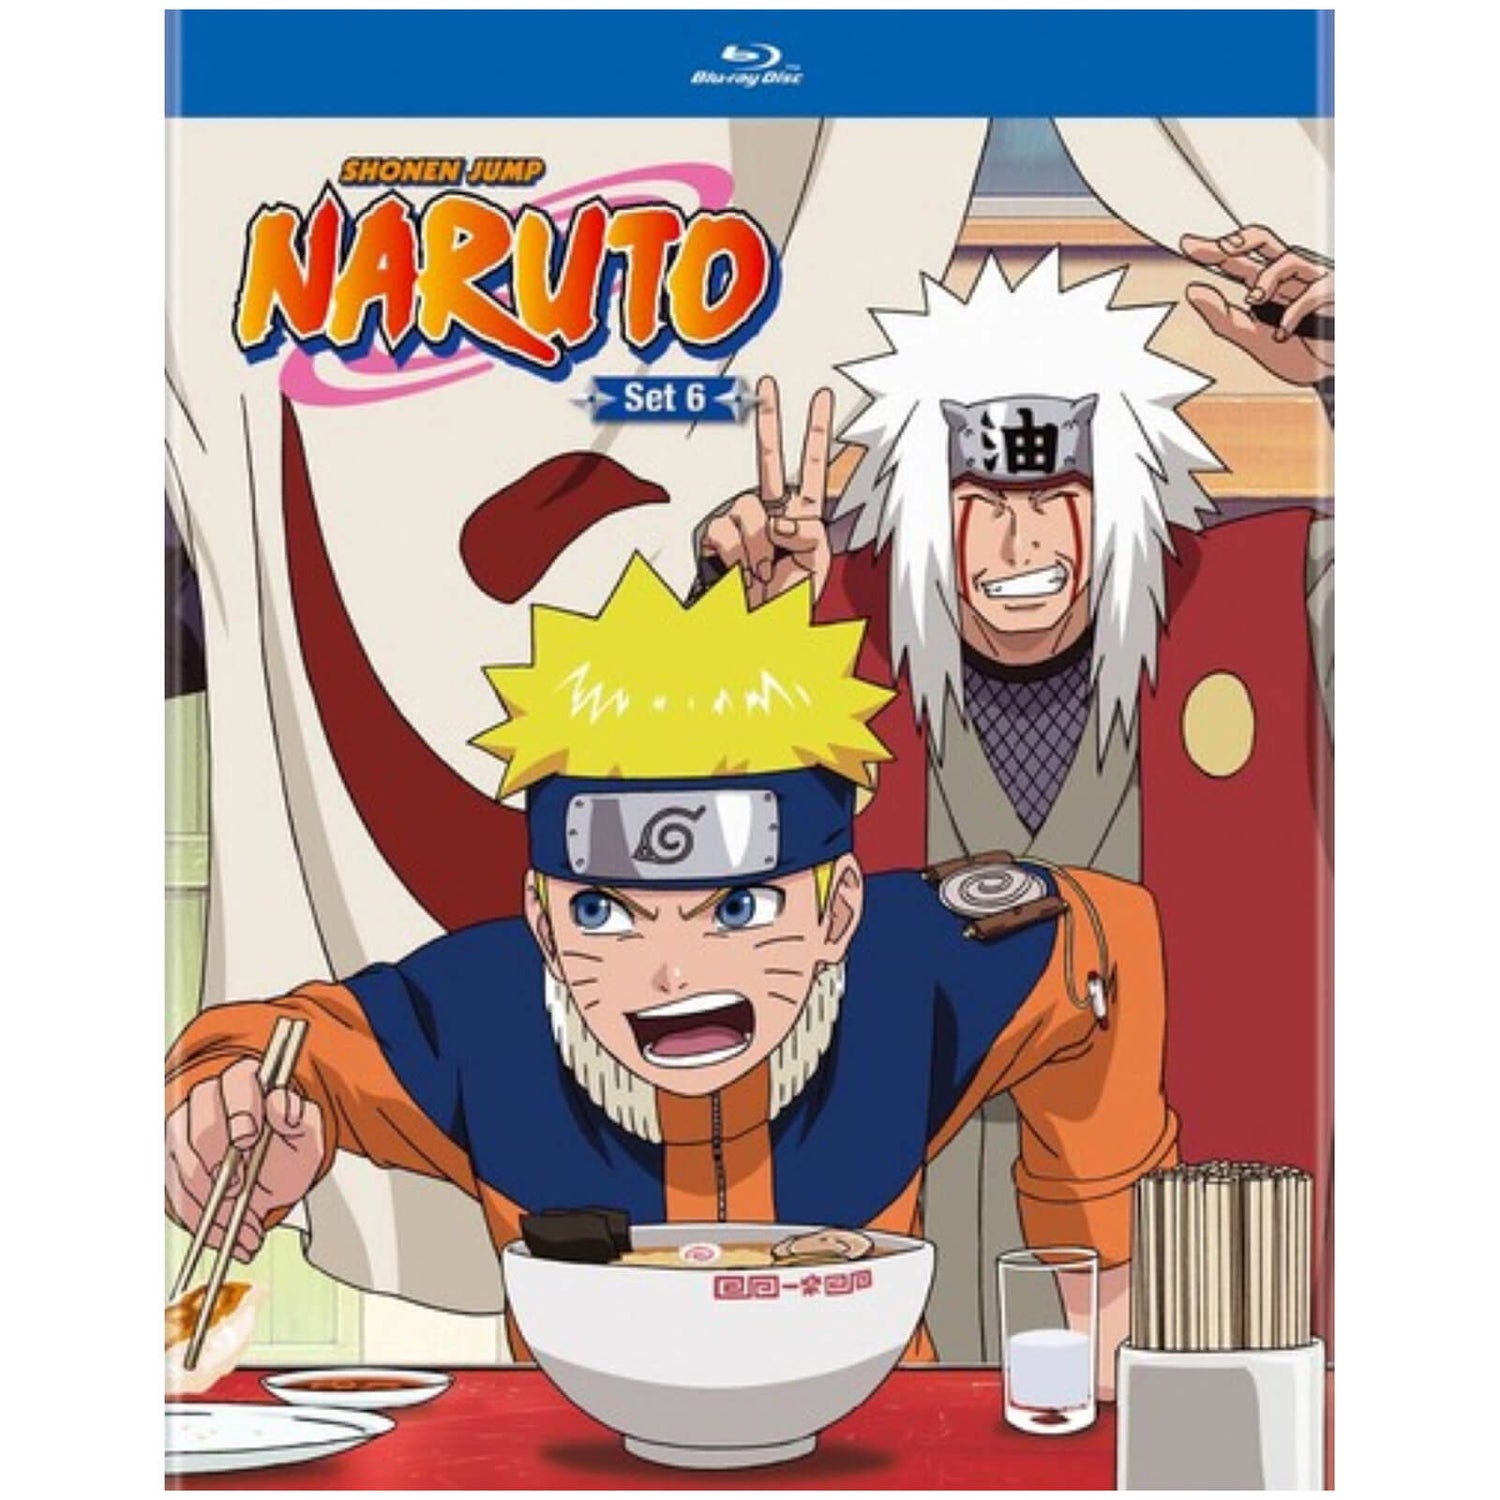 Naruto: Set 6 (US Import)